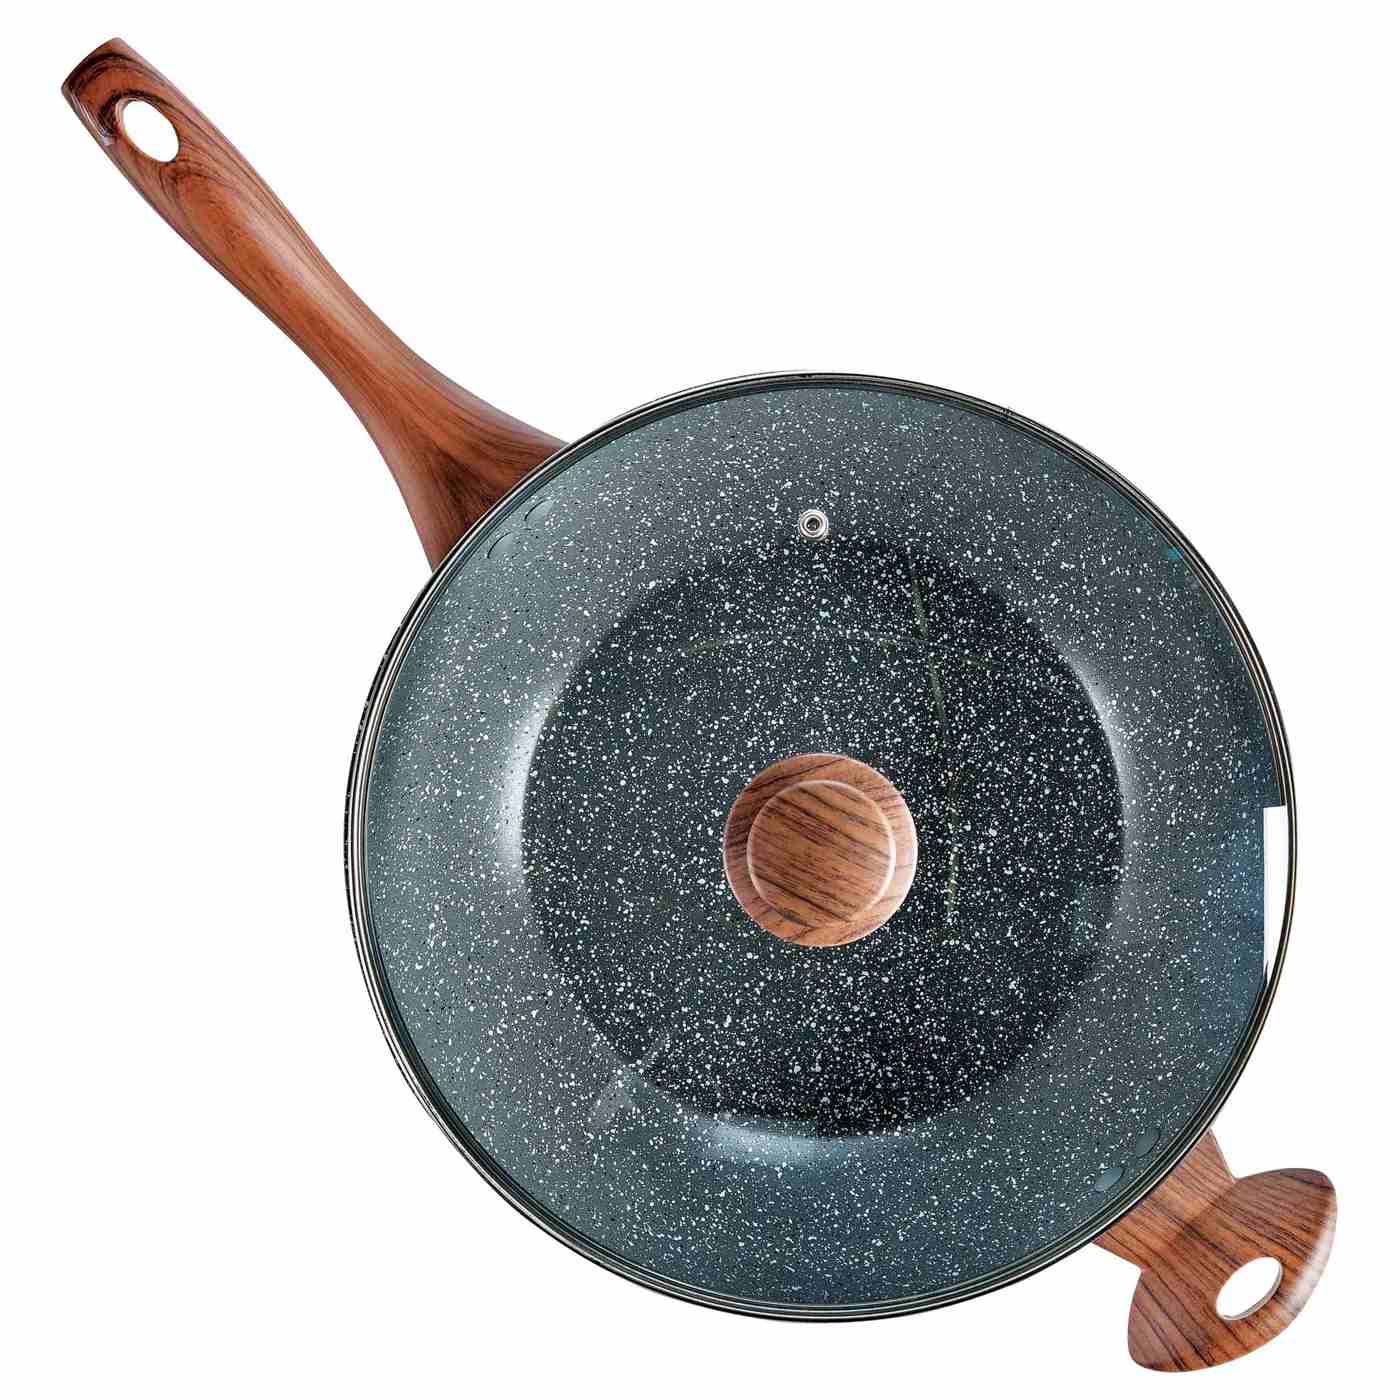 Cocinaware Pre-Seasoned Cast Iron Sauce Pan